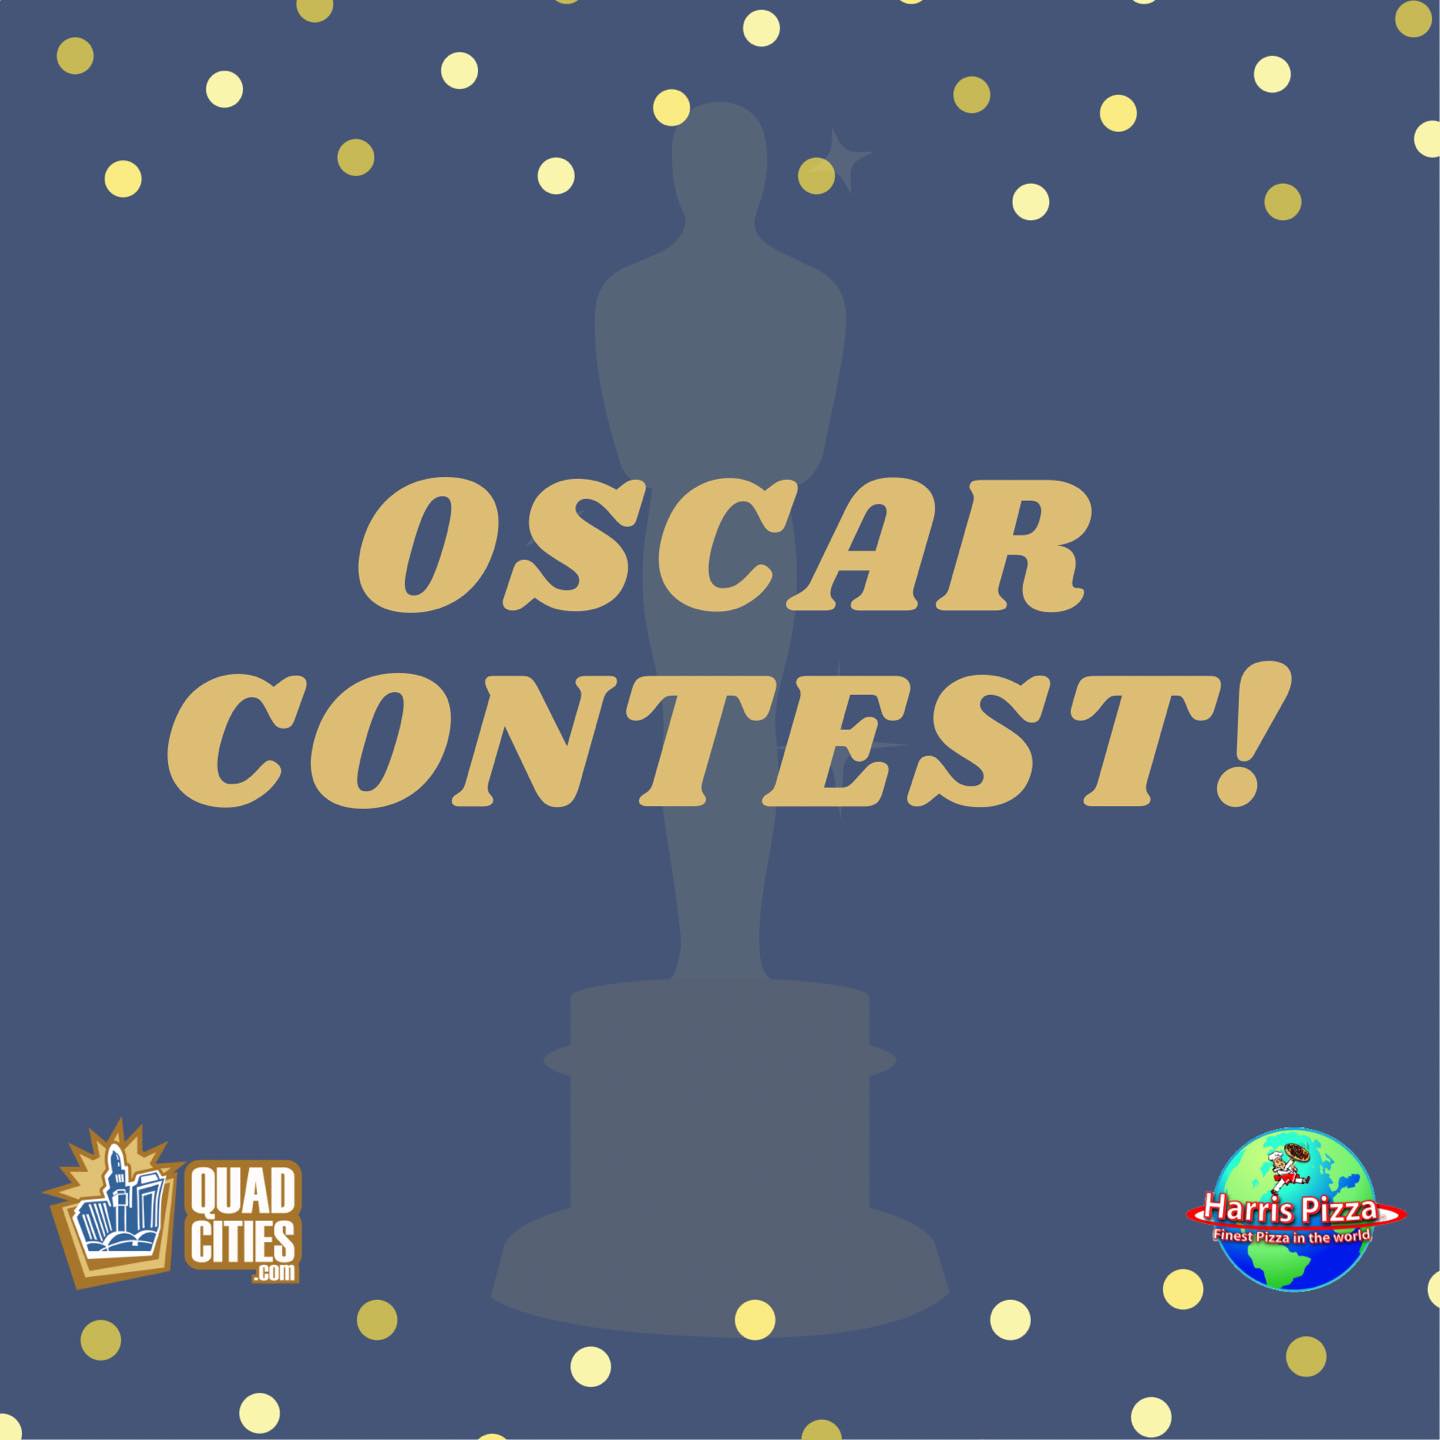 Ryan Lootens Wins The First Annual Oscar Contest! Quad